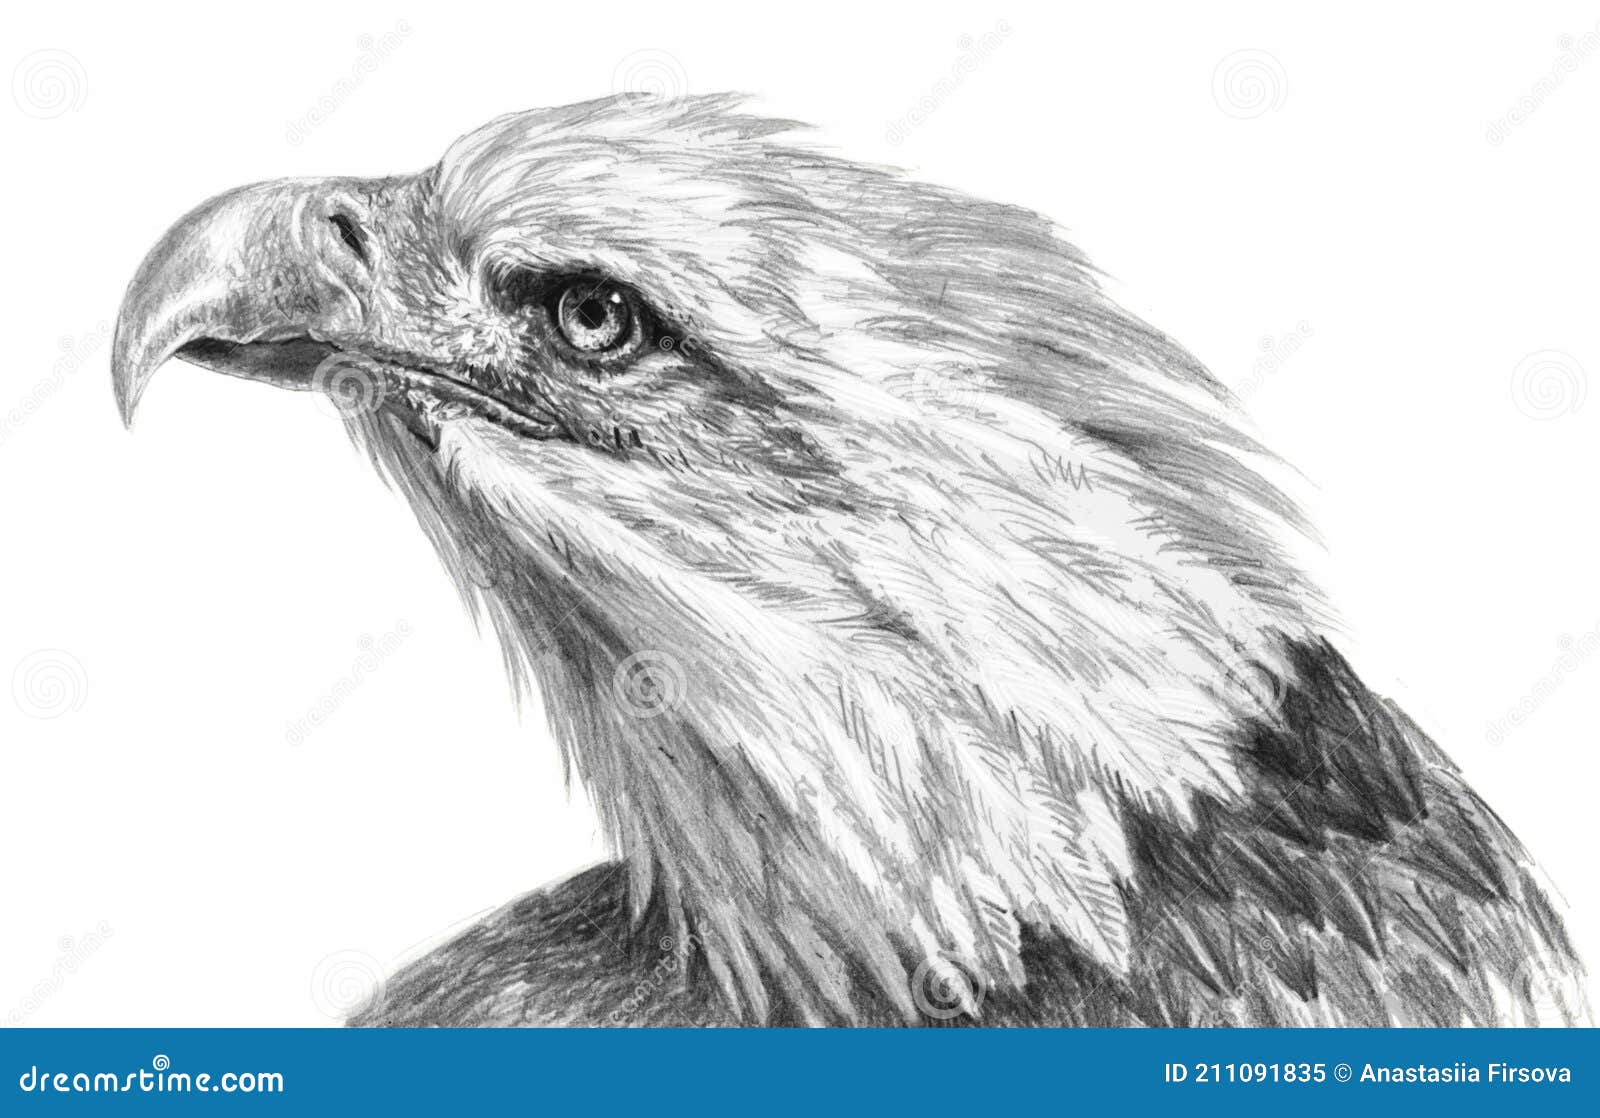 30700 Eagle Face Stock Photos Pictures  RoyaltyFree Images  iStock  Eagle  face vector Bald eagle face